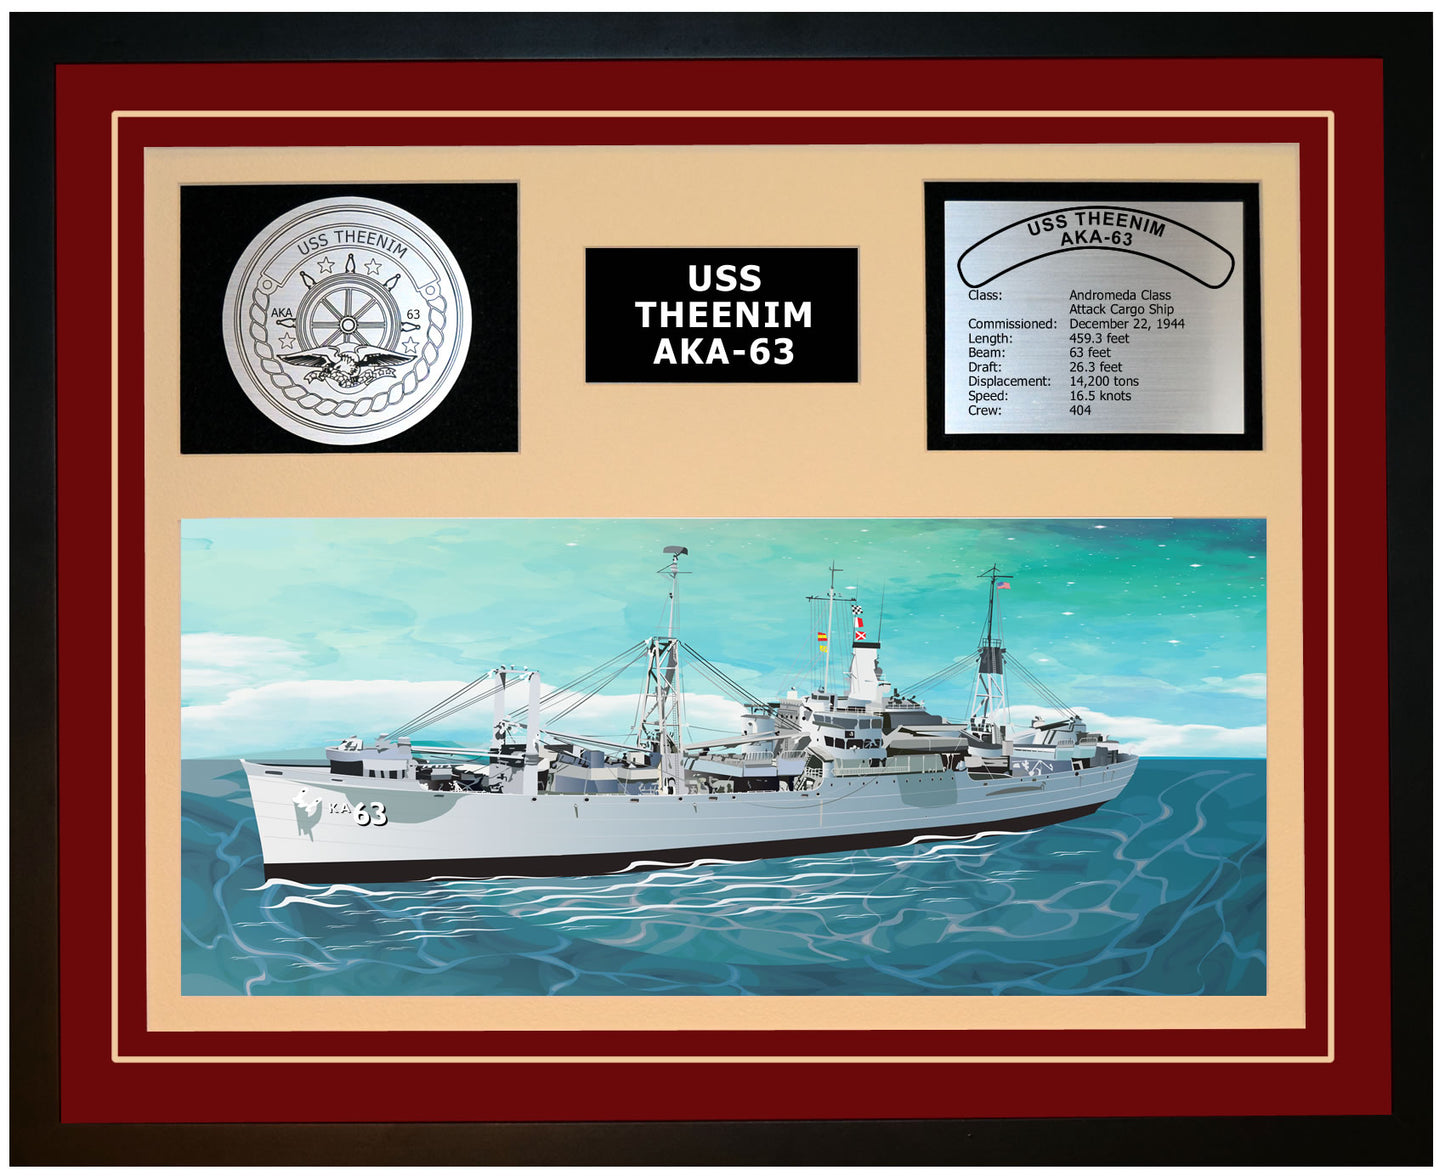 USS THEENIM AKA-63 Framed Navy Ship Display Burgundy